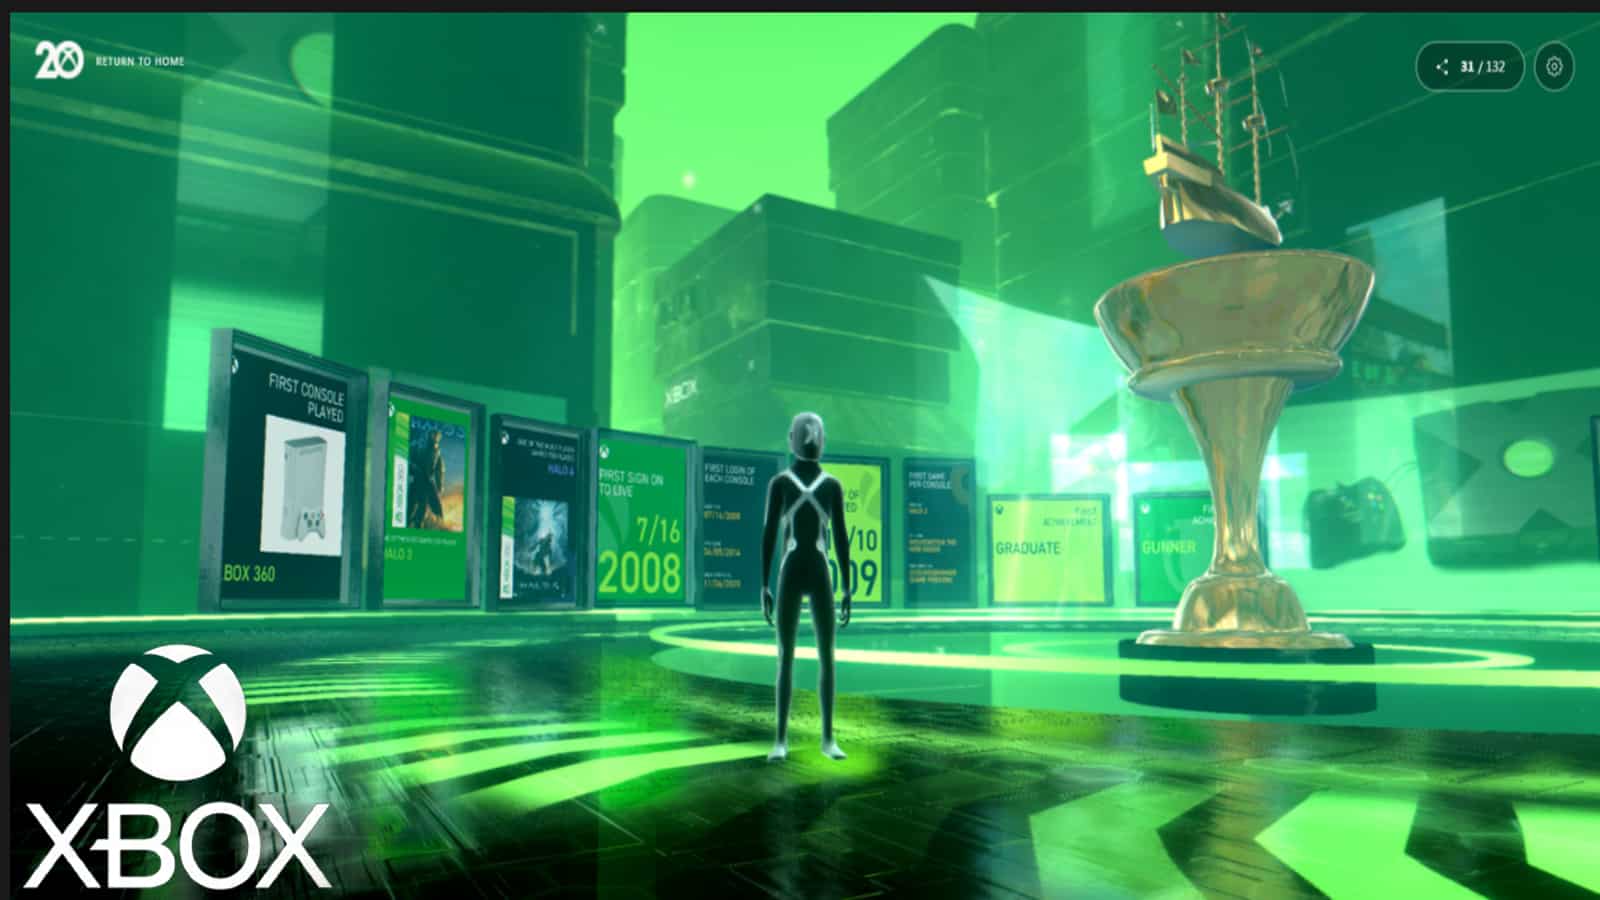 👾 Stvoryly virtuaľnyj muzej Xbox — diznajtesja istoriju konsoli 